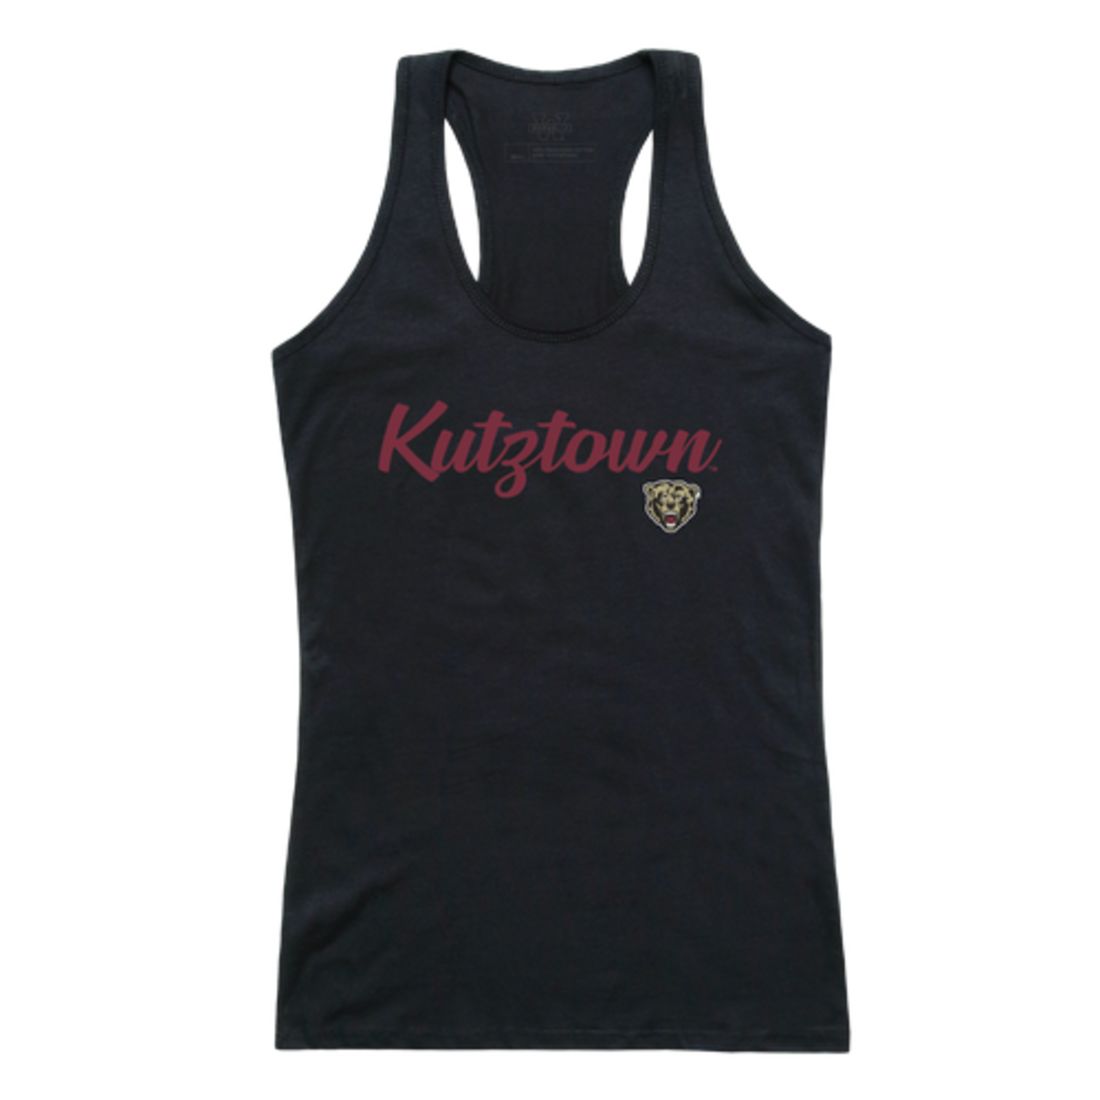 Kutztown University of Pennsylvaniaen Bears Womens Script Tank Top T-Shirt-Campus-Wardrobe